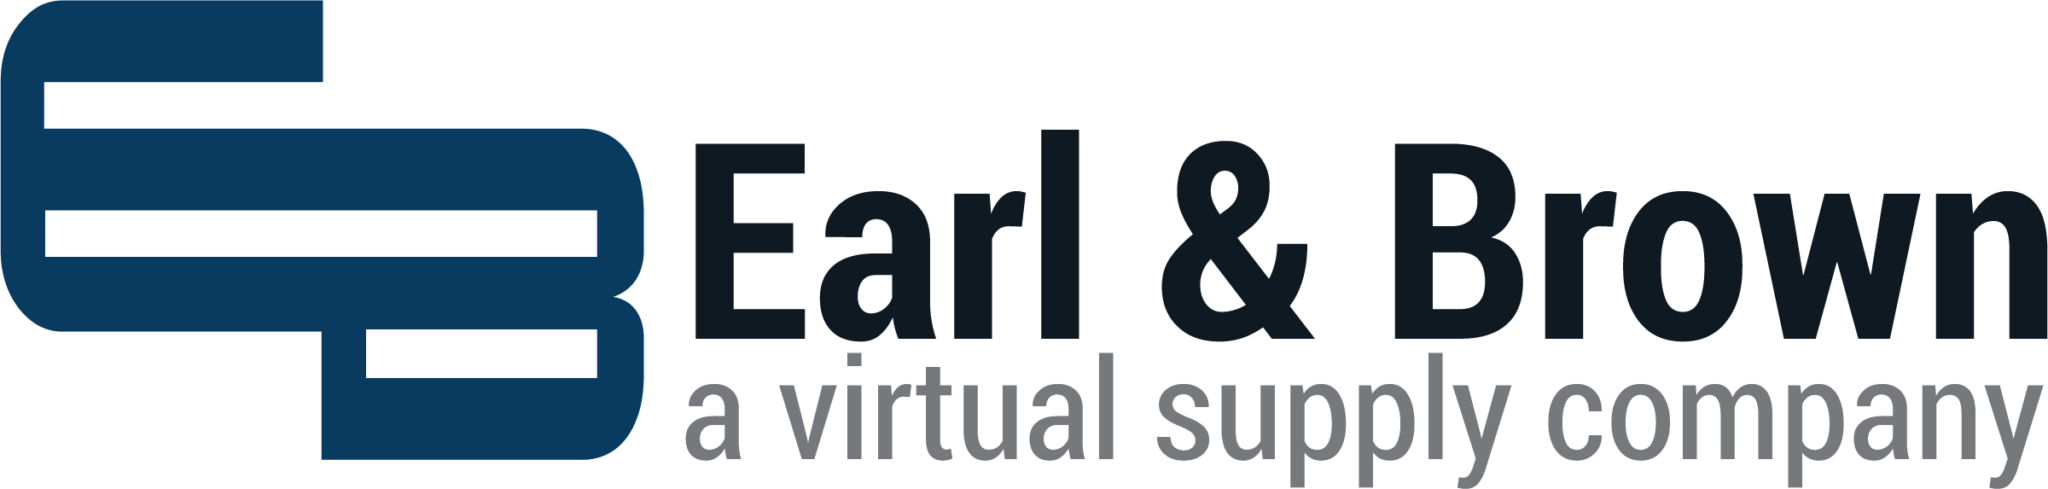 Earl and Brown virtual internet company